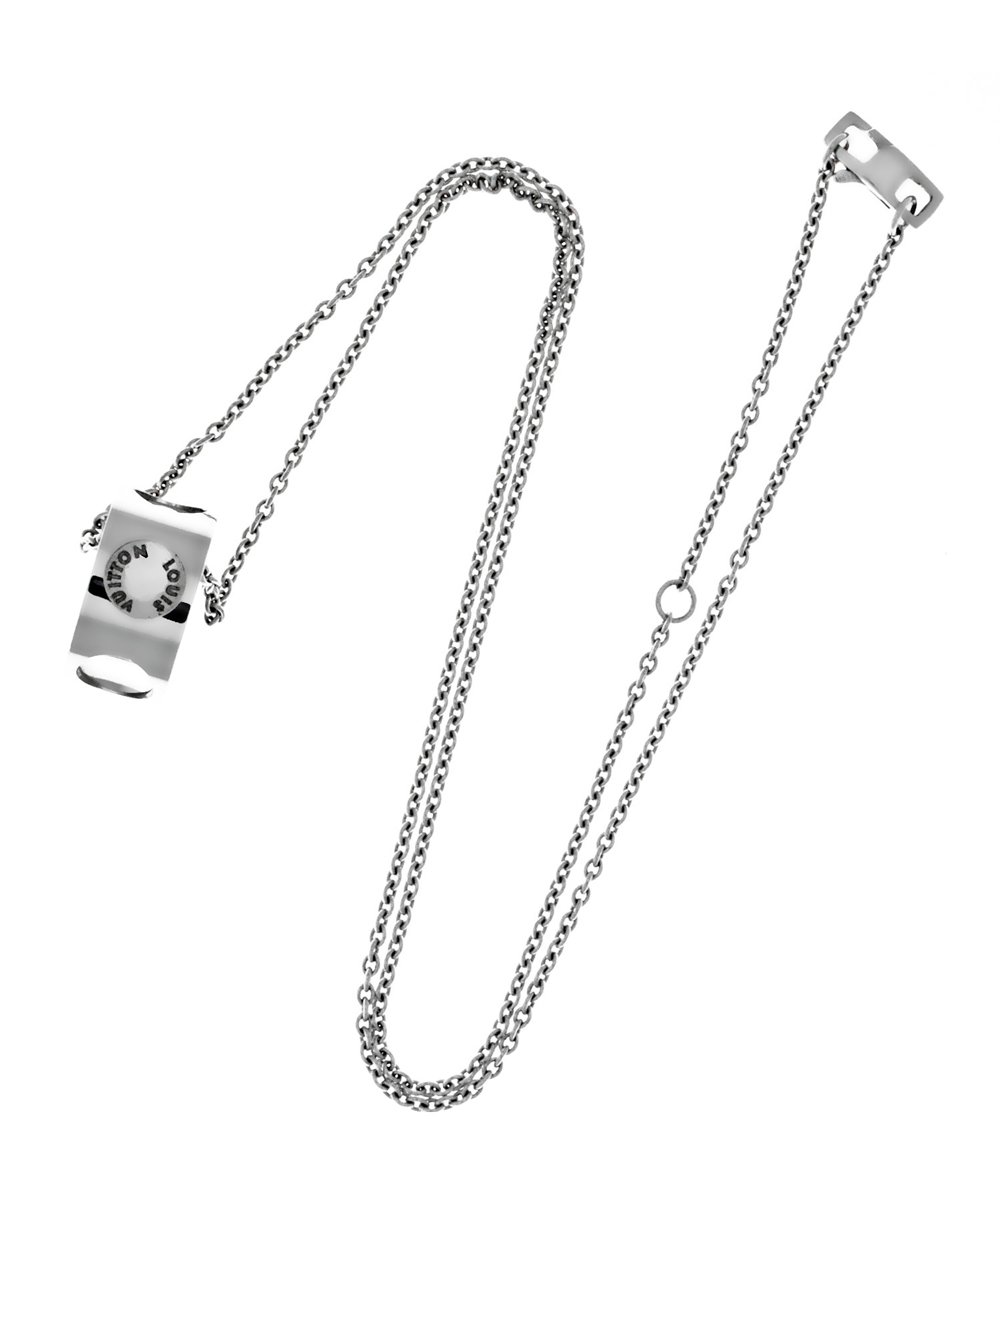 Empreinte Chain Bracelet, White Gold And Diamonds - Luxury Silver